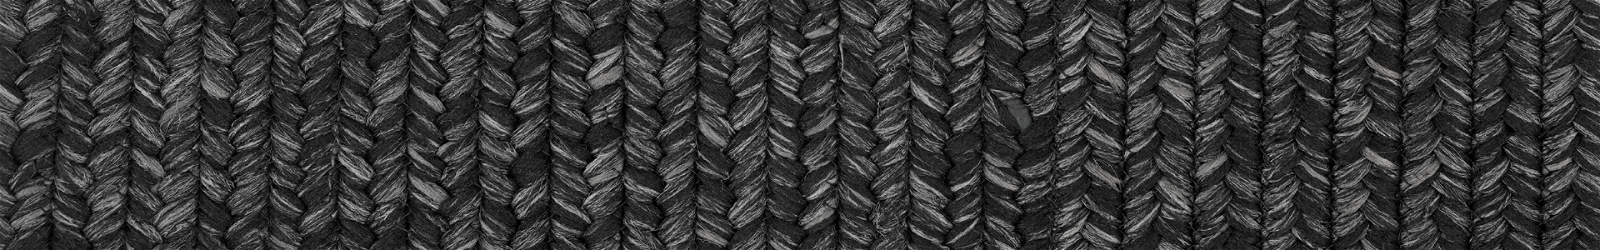 Cotton - Black Braided Rugs